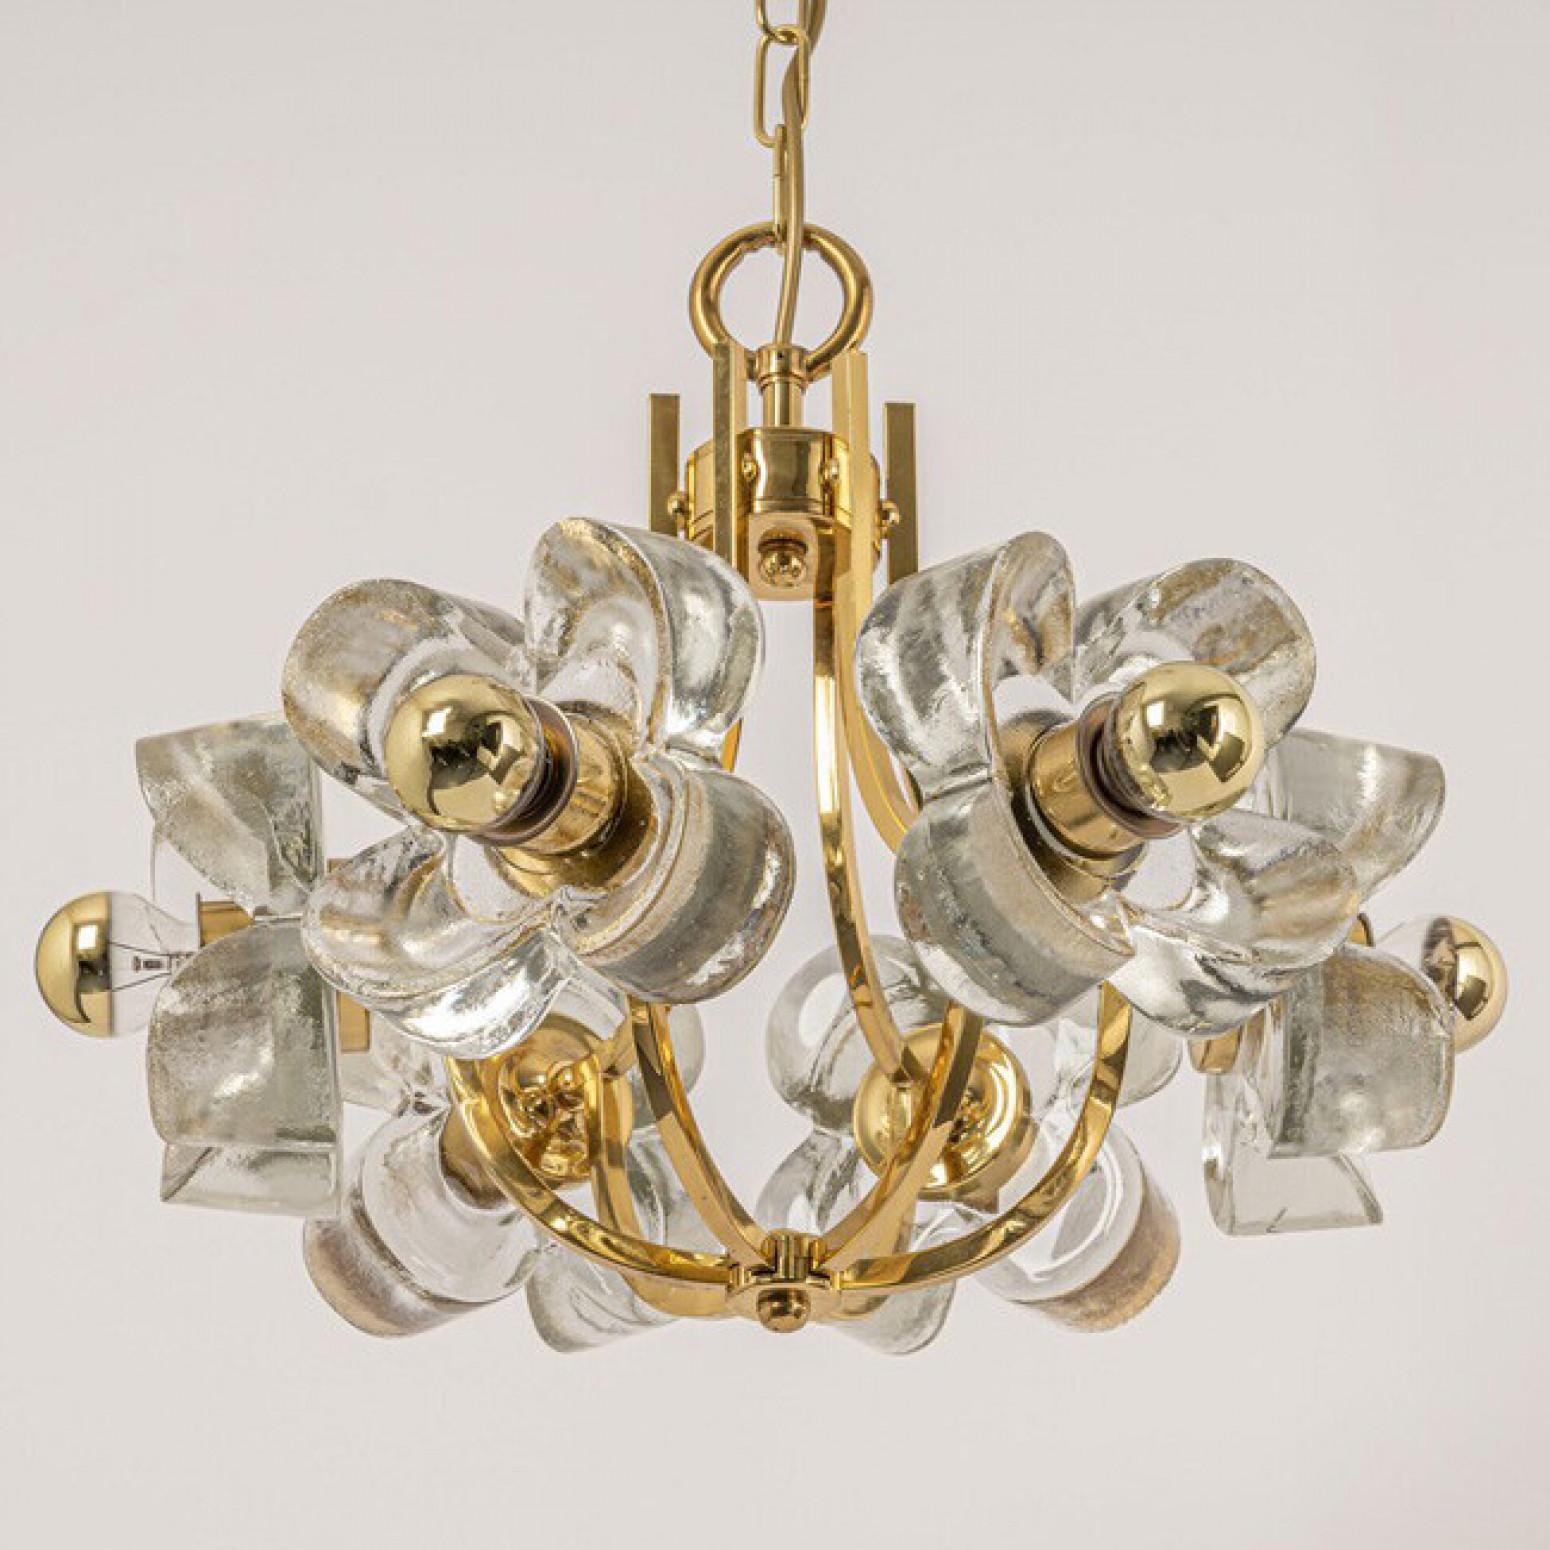 1 of 2 Sische Glass and Brass Chandelier, 1960s Modernist Design, Kalmar Style For Sale 3